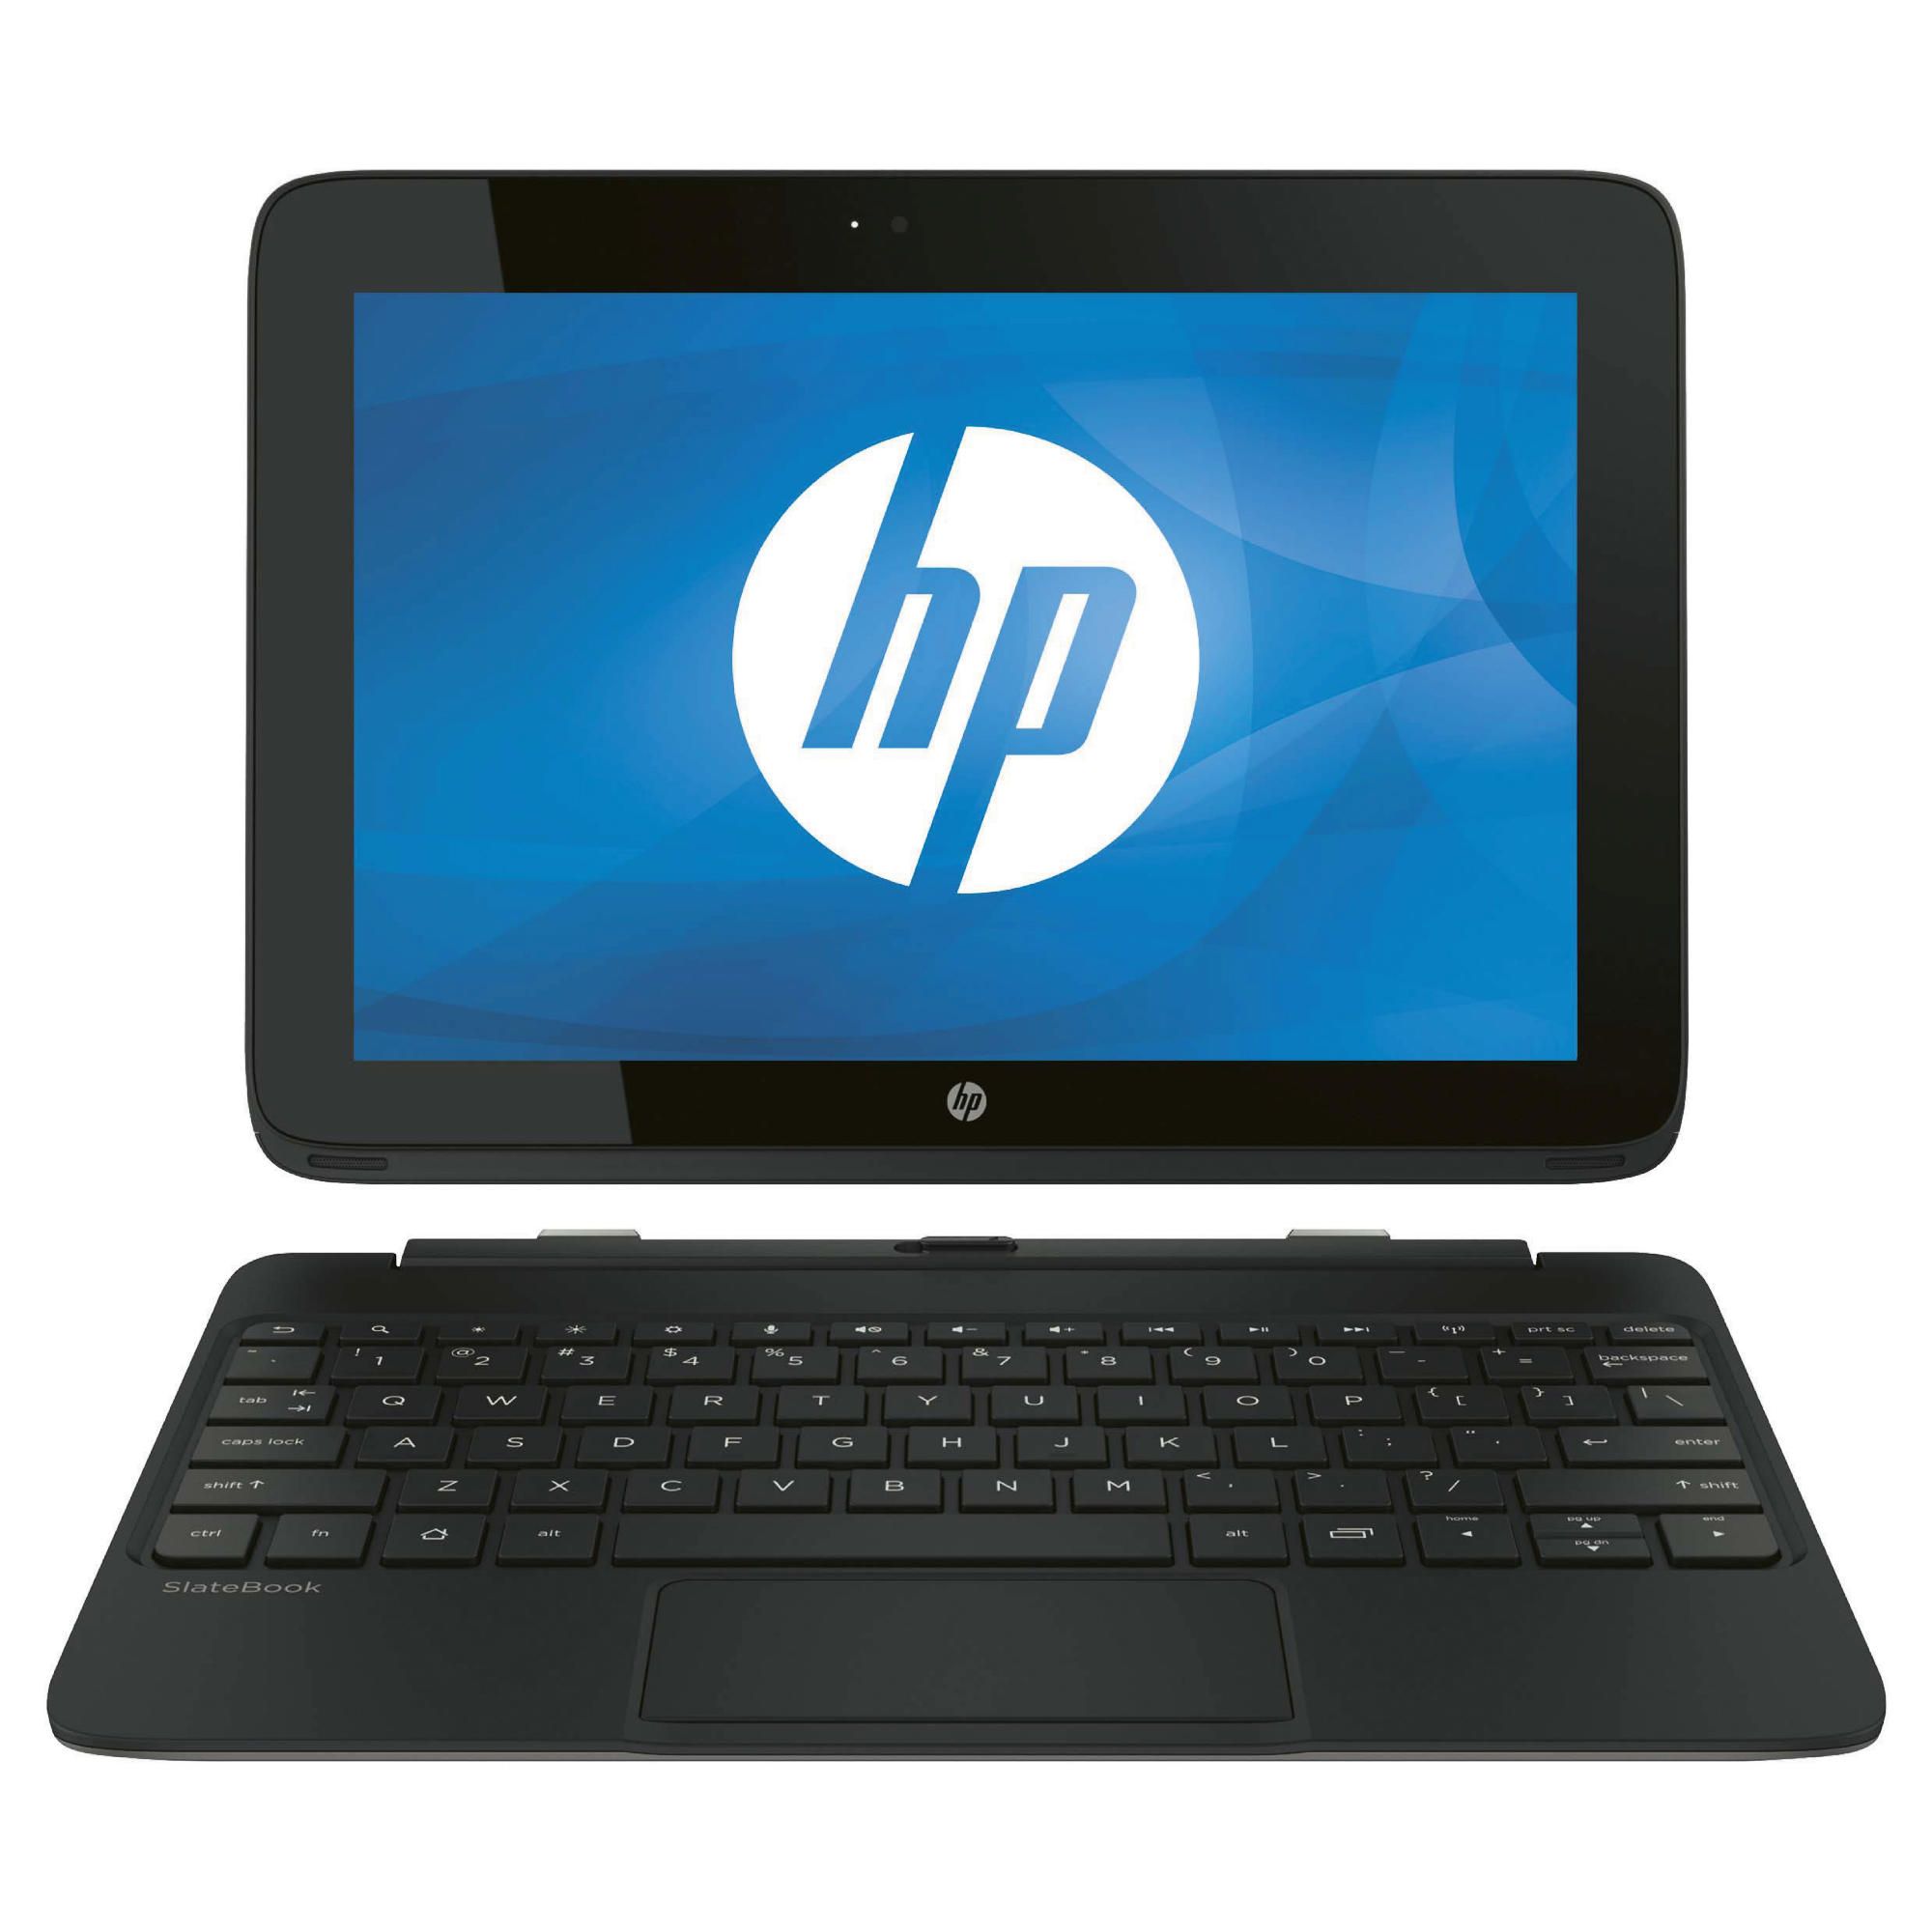 HP Slatebook10 x2 Convertible (2GB RAM/32GB SSD/Android 4.1/10.2” TouchScreen) Grey